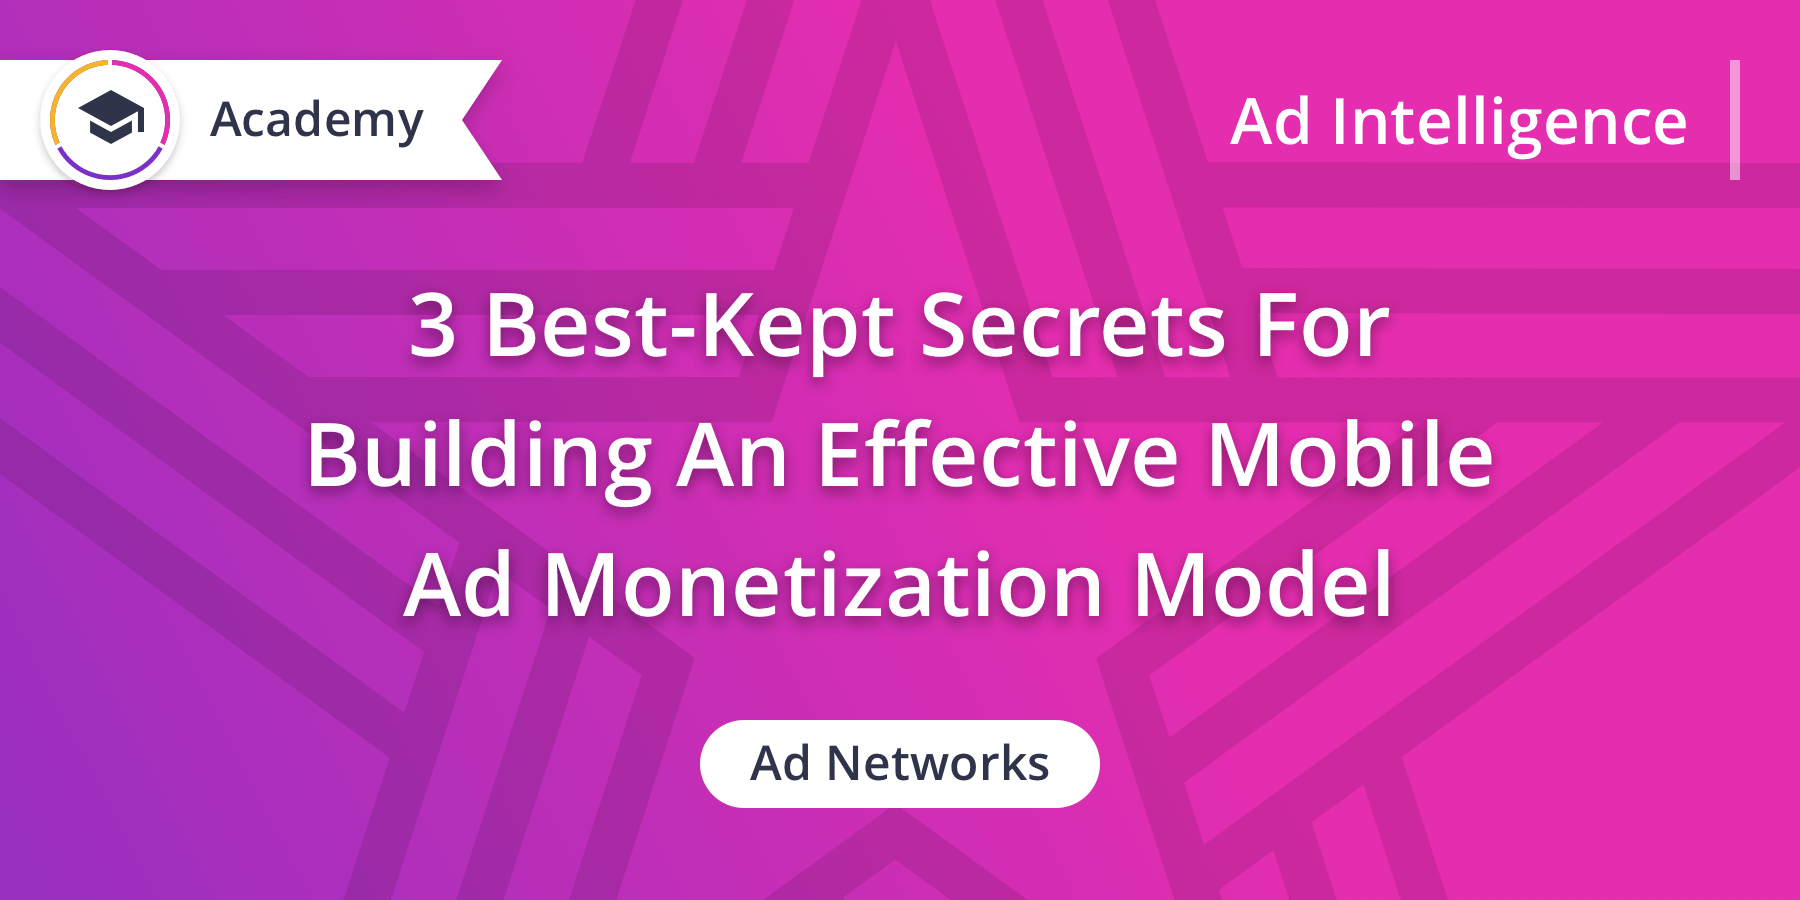 3 Best-Kept Secrets For Building An Effective Mobile Ad Monetization Model